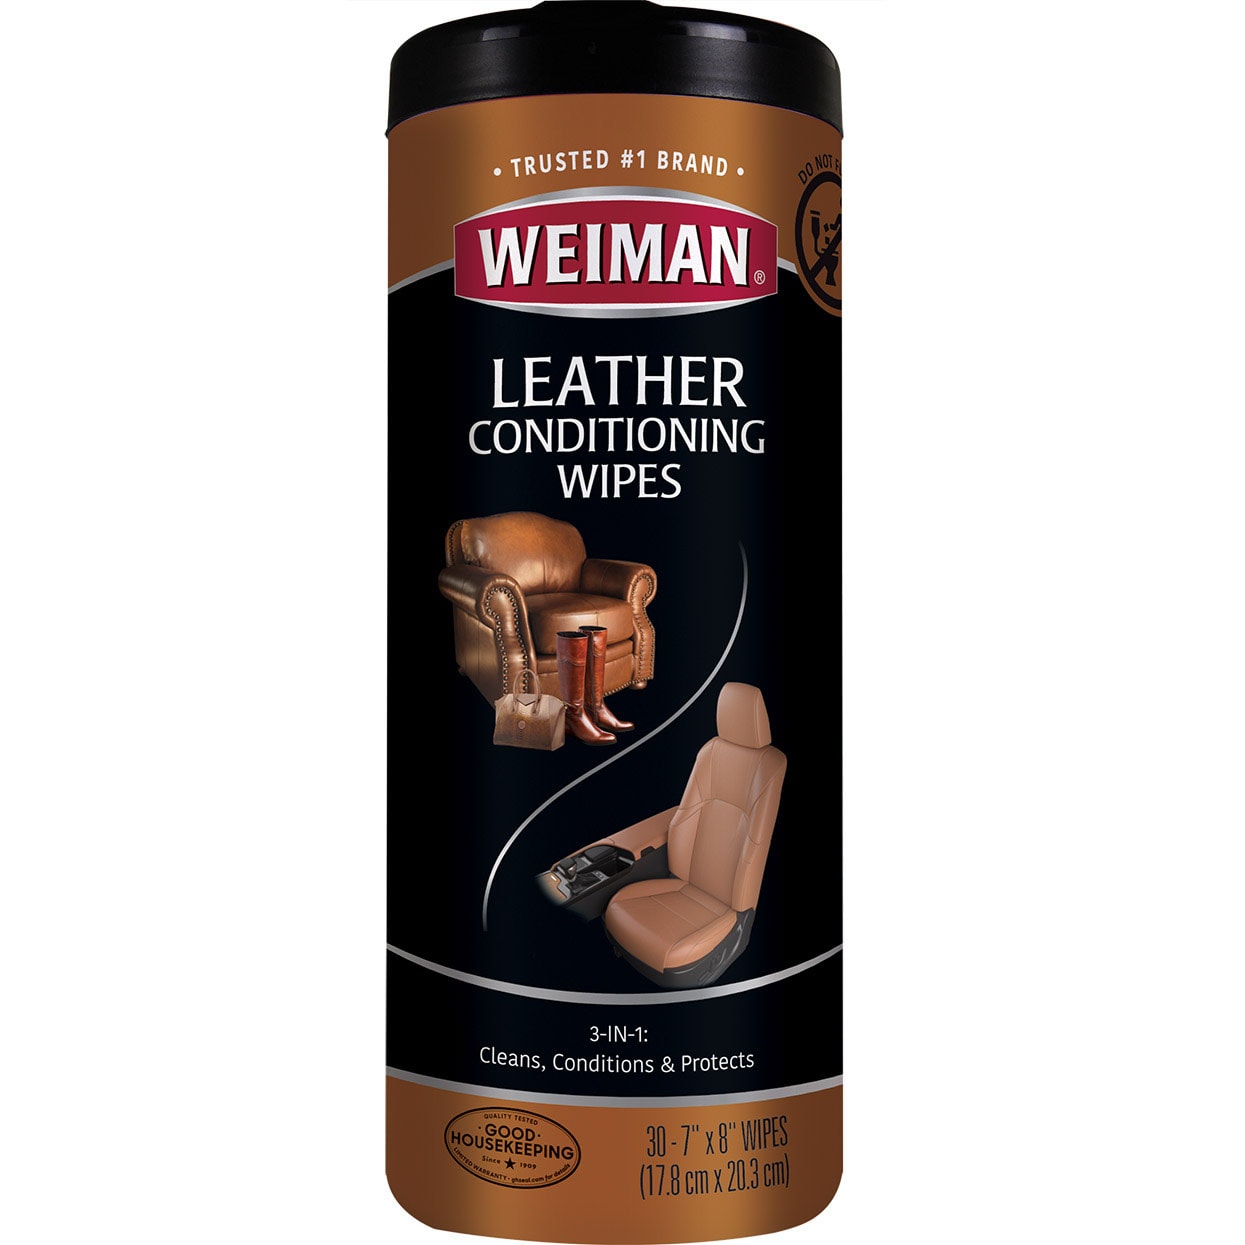 Leather Easy Restoration Kit